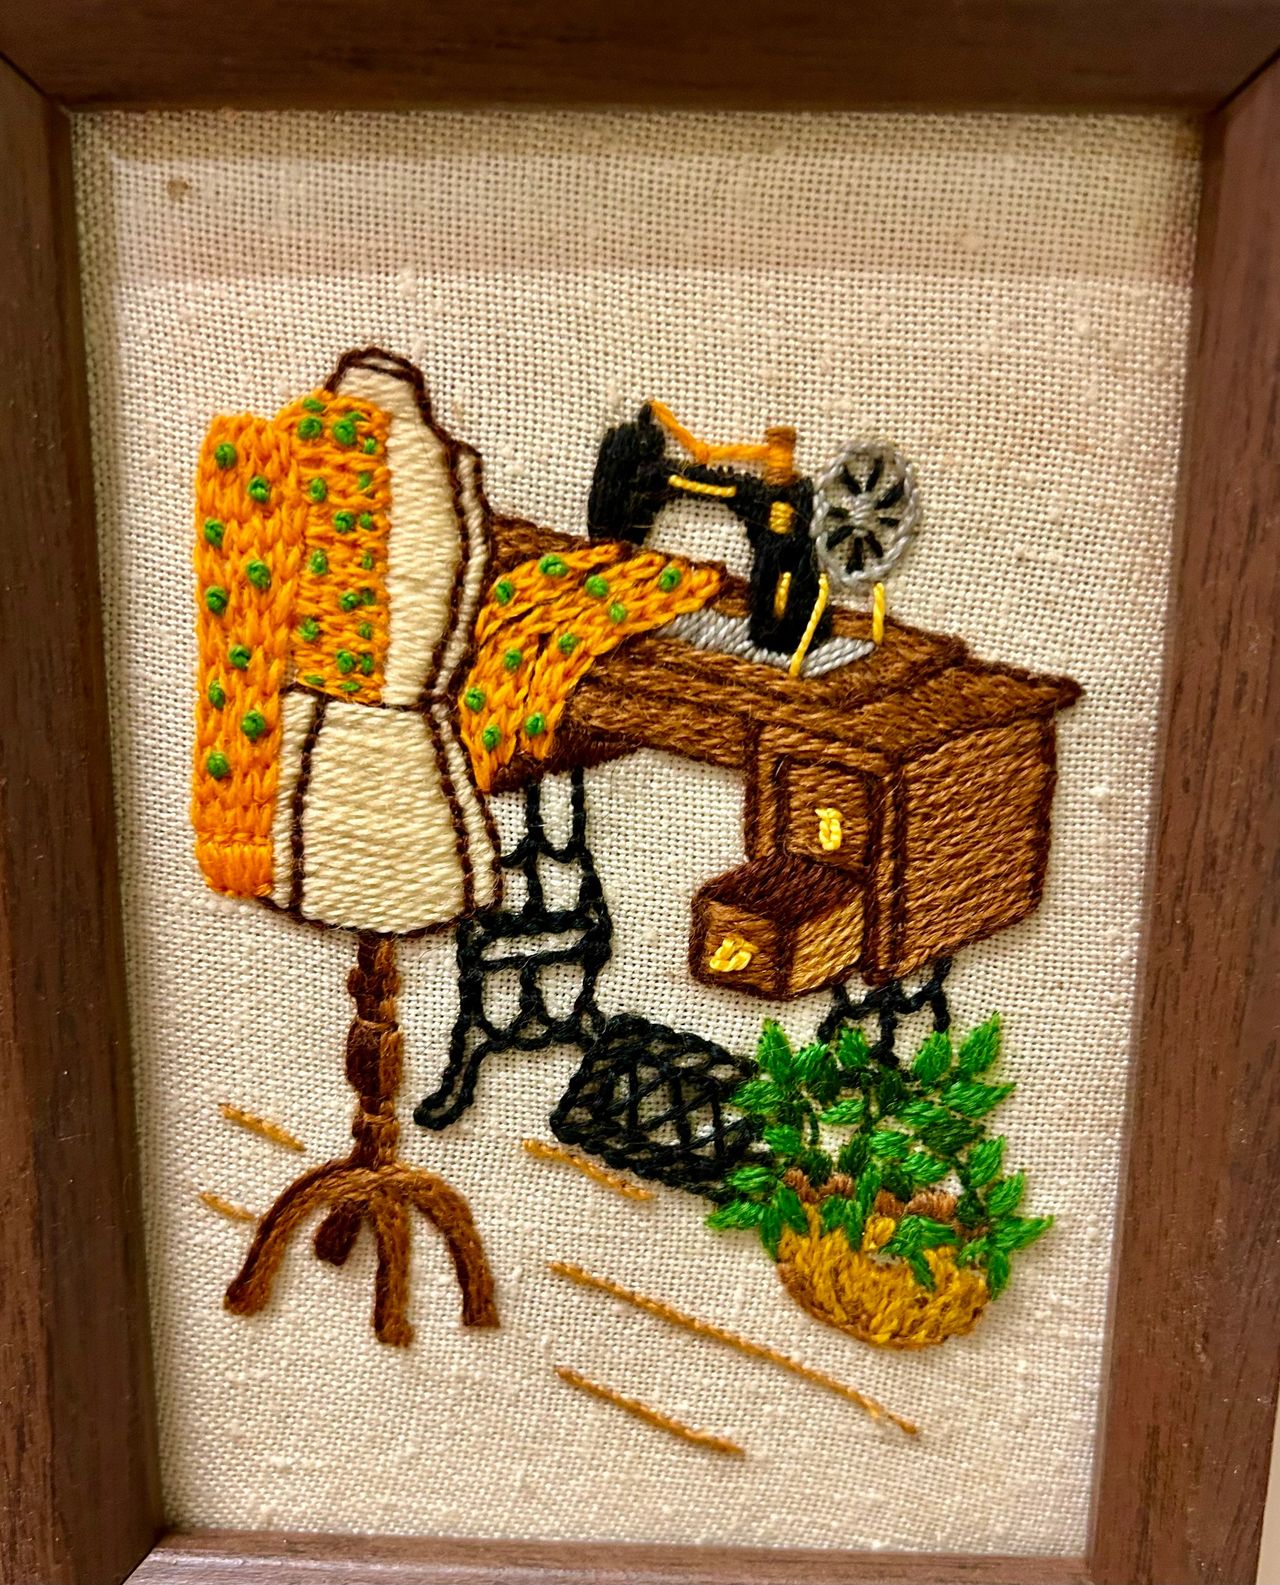 Vintage sewing cross-stitch